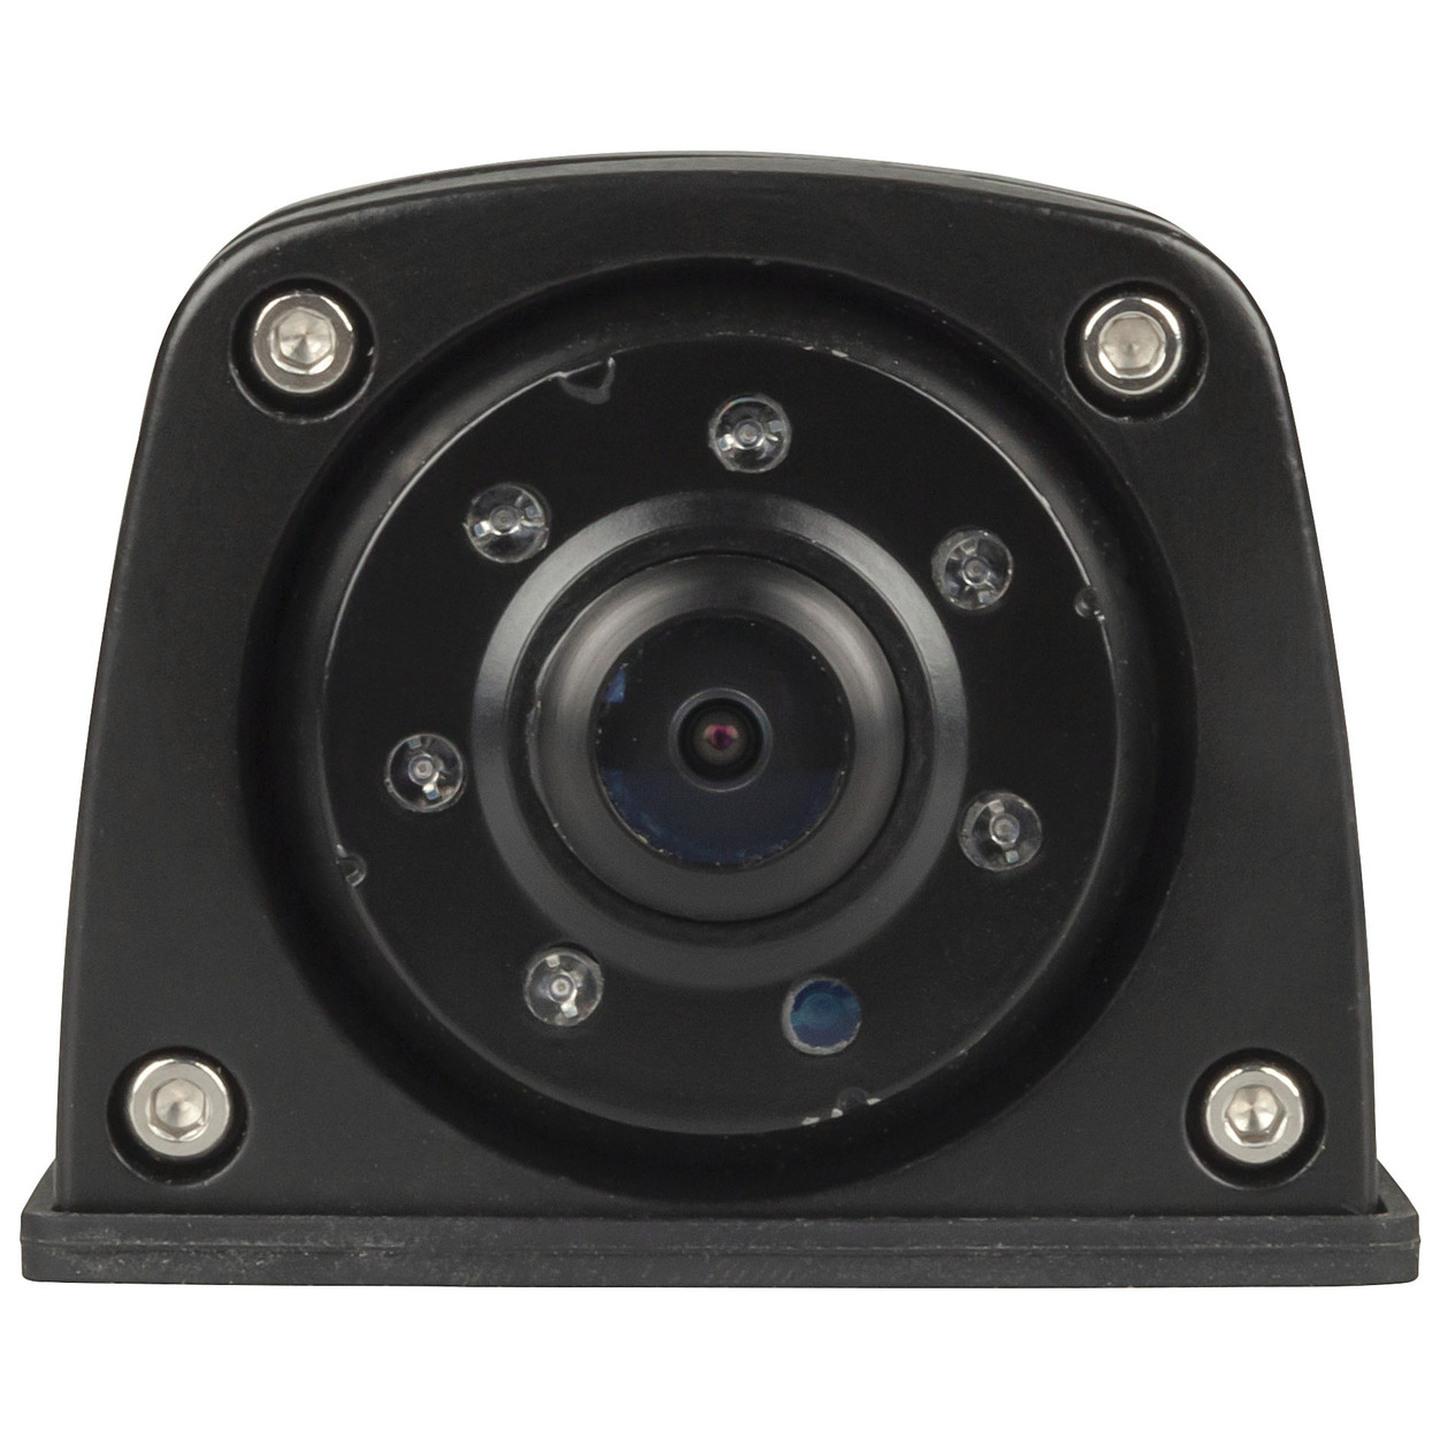 1080p External Waterproof IP69 Wedge Vehicle Camera with IR Illumination and 120deg Viewing Angle